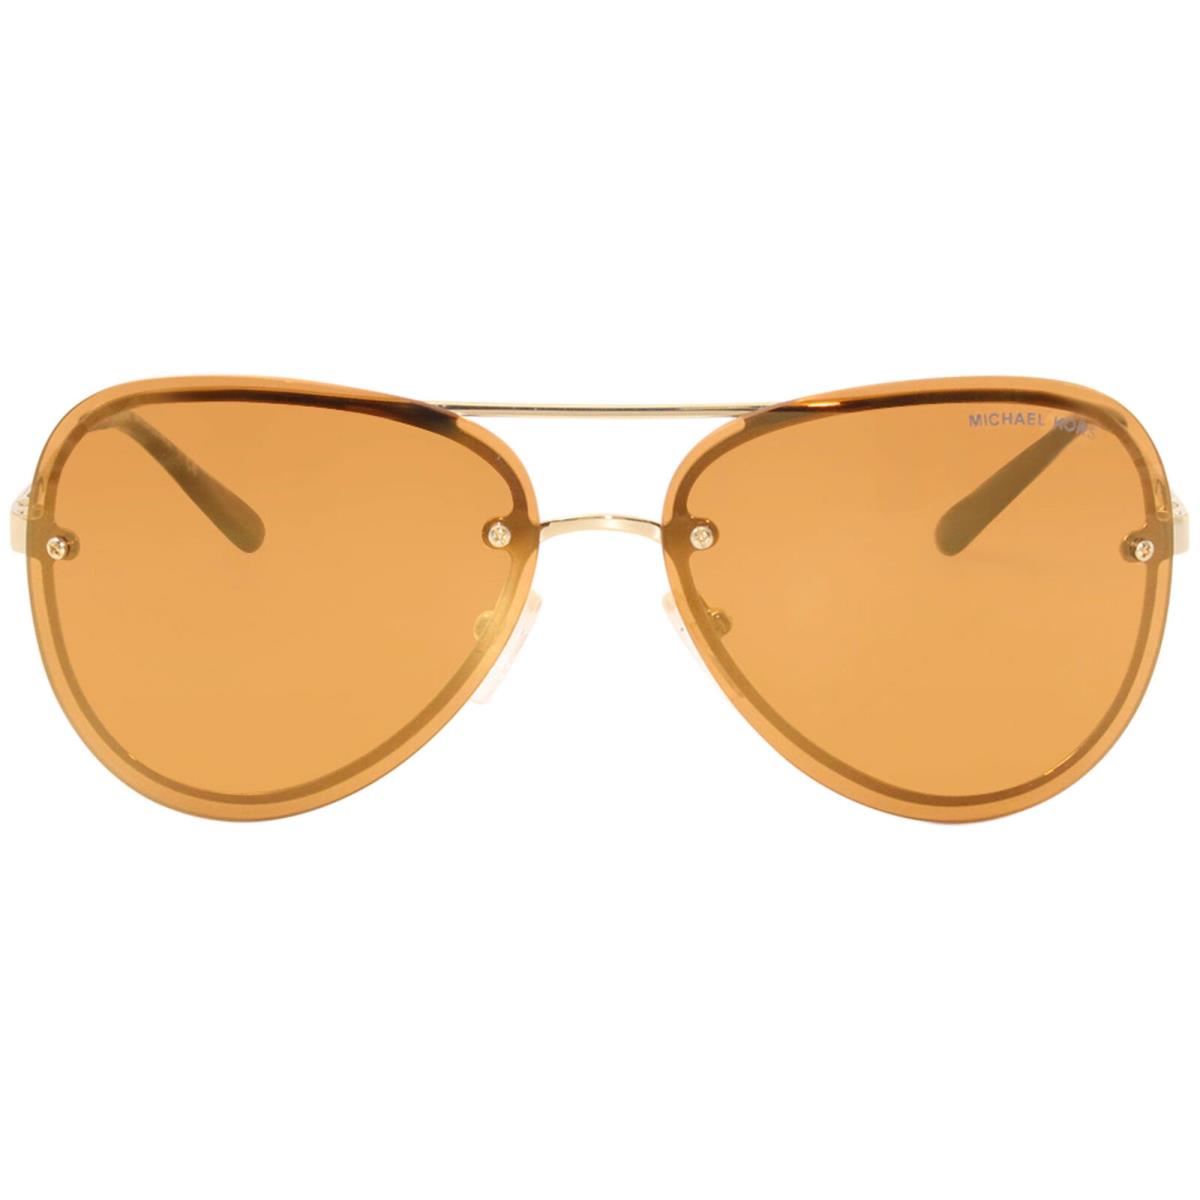 Michael Kors La Jolla MK1026 10142C Sunglasses Shiny Pale Gold/acorn Mirror Lens